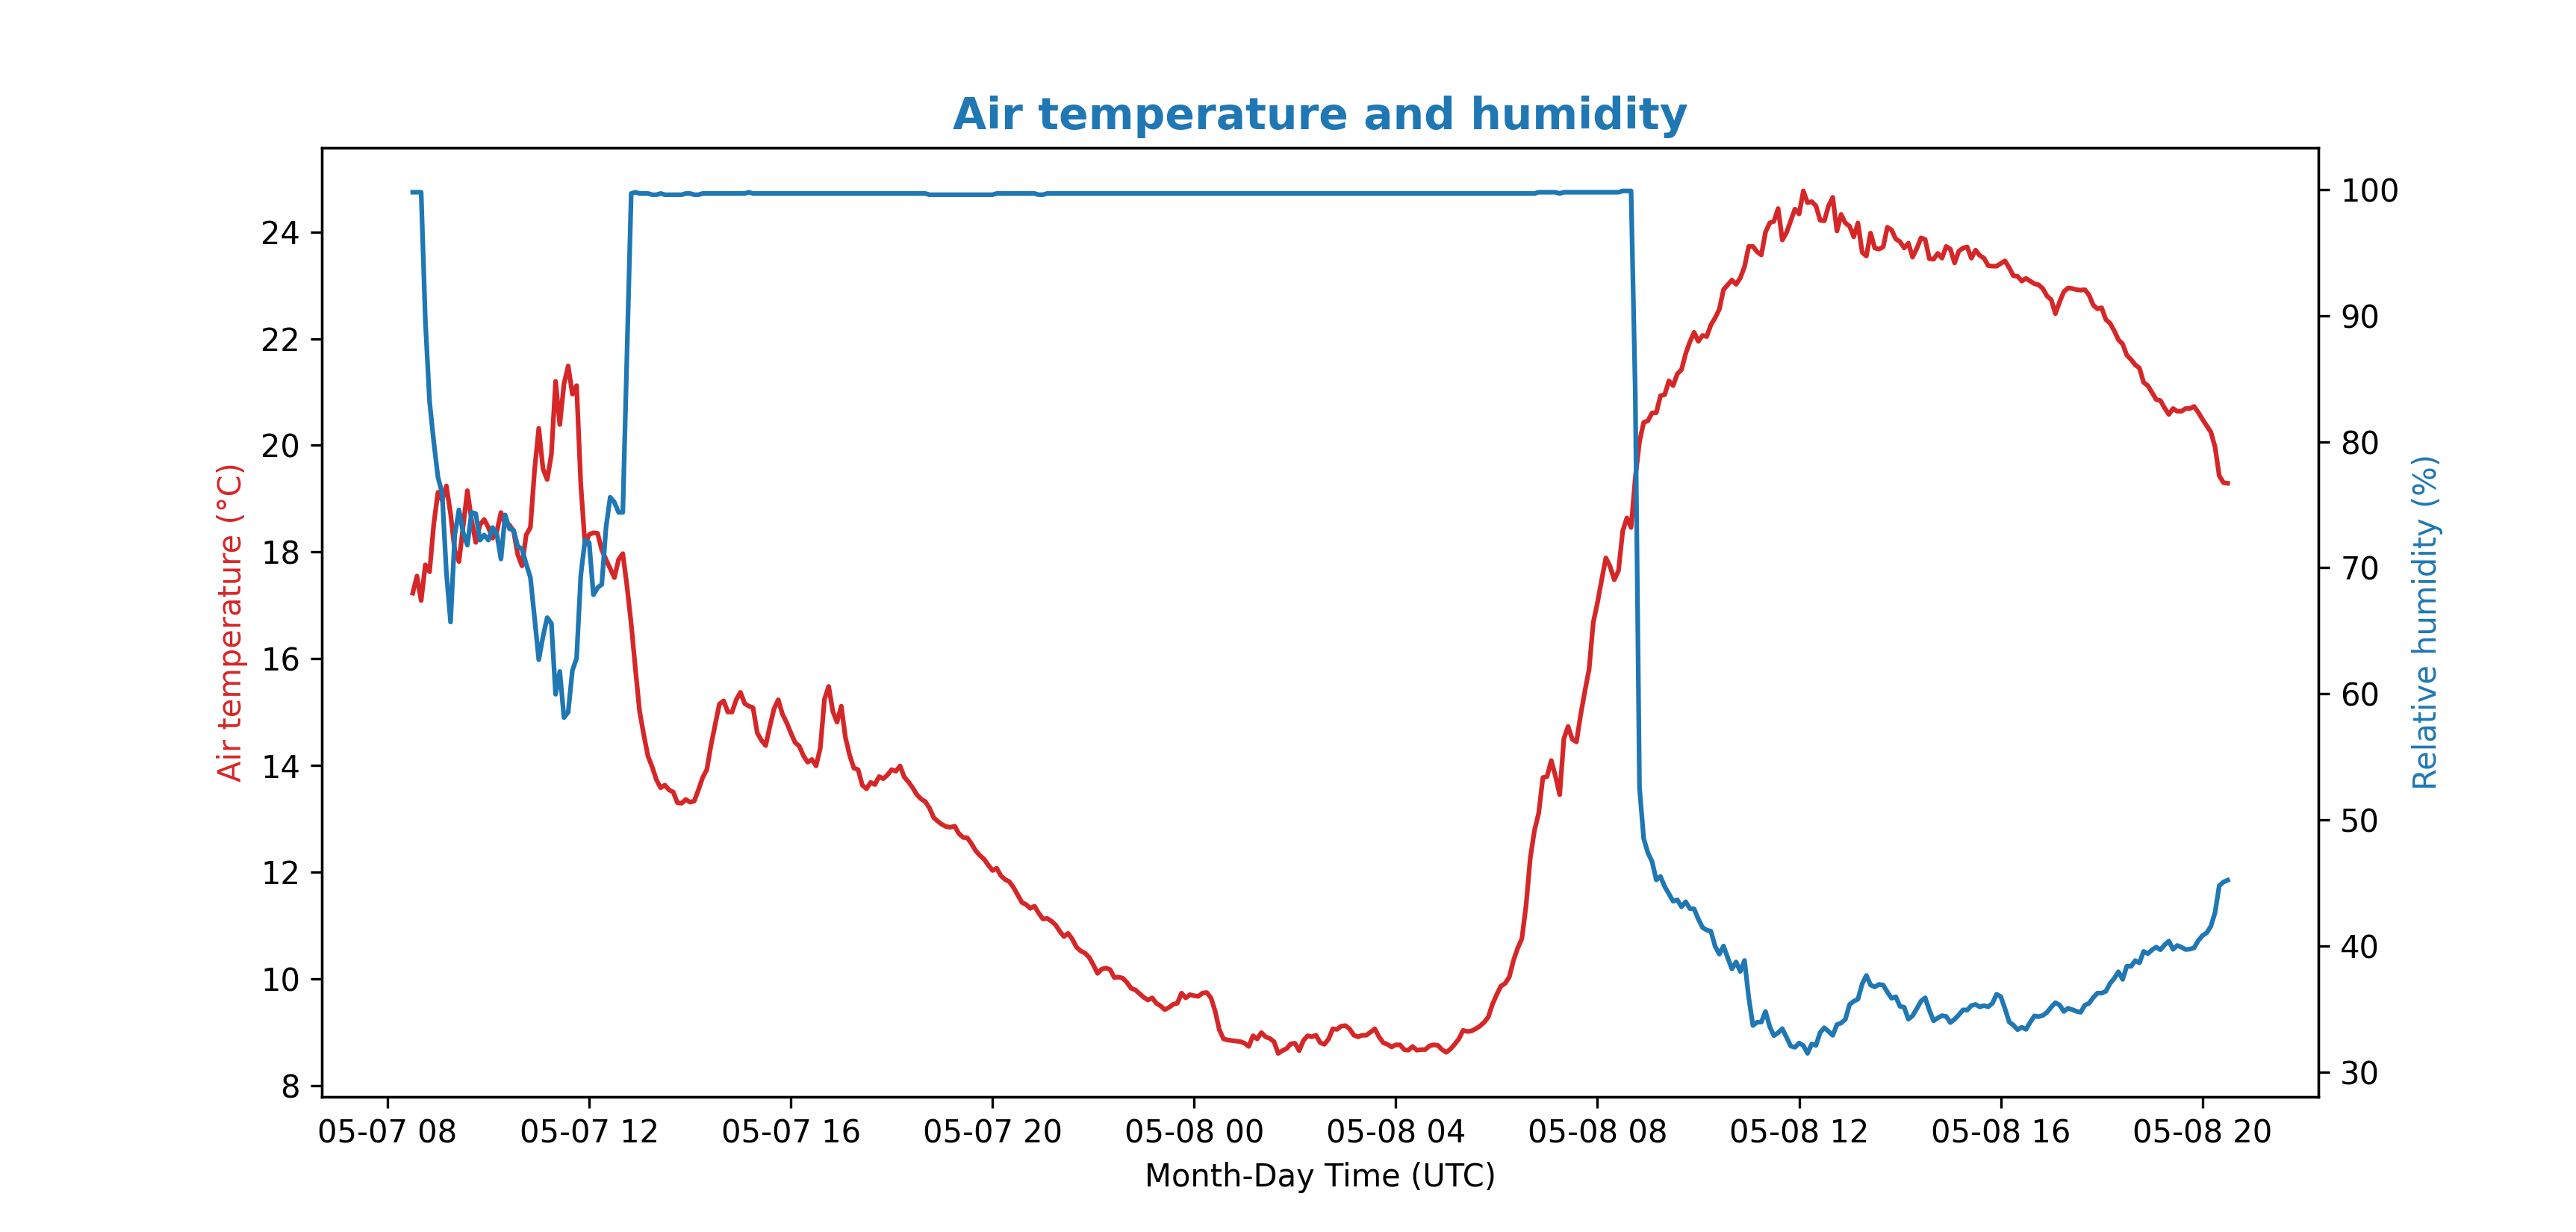 Air temperature and humidity